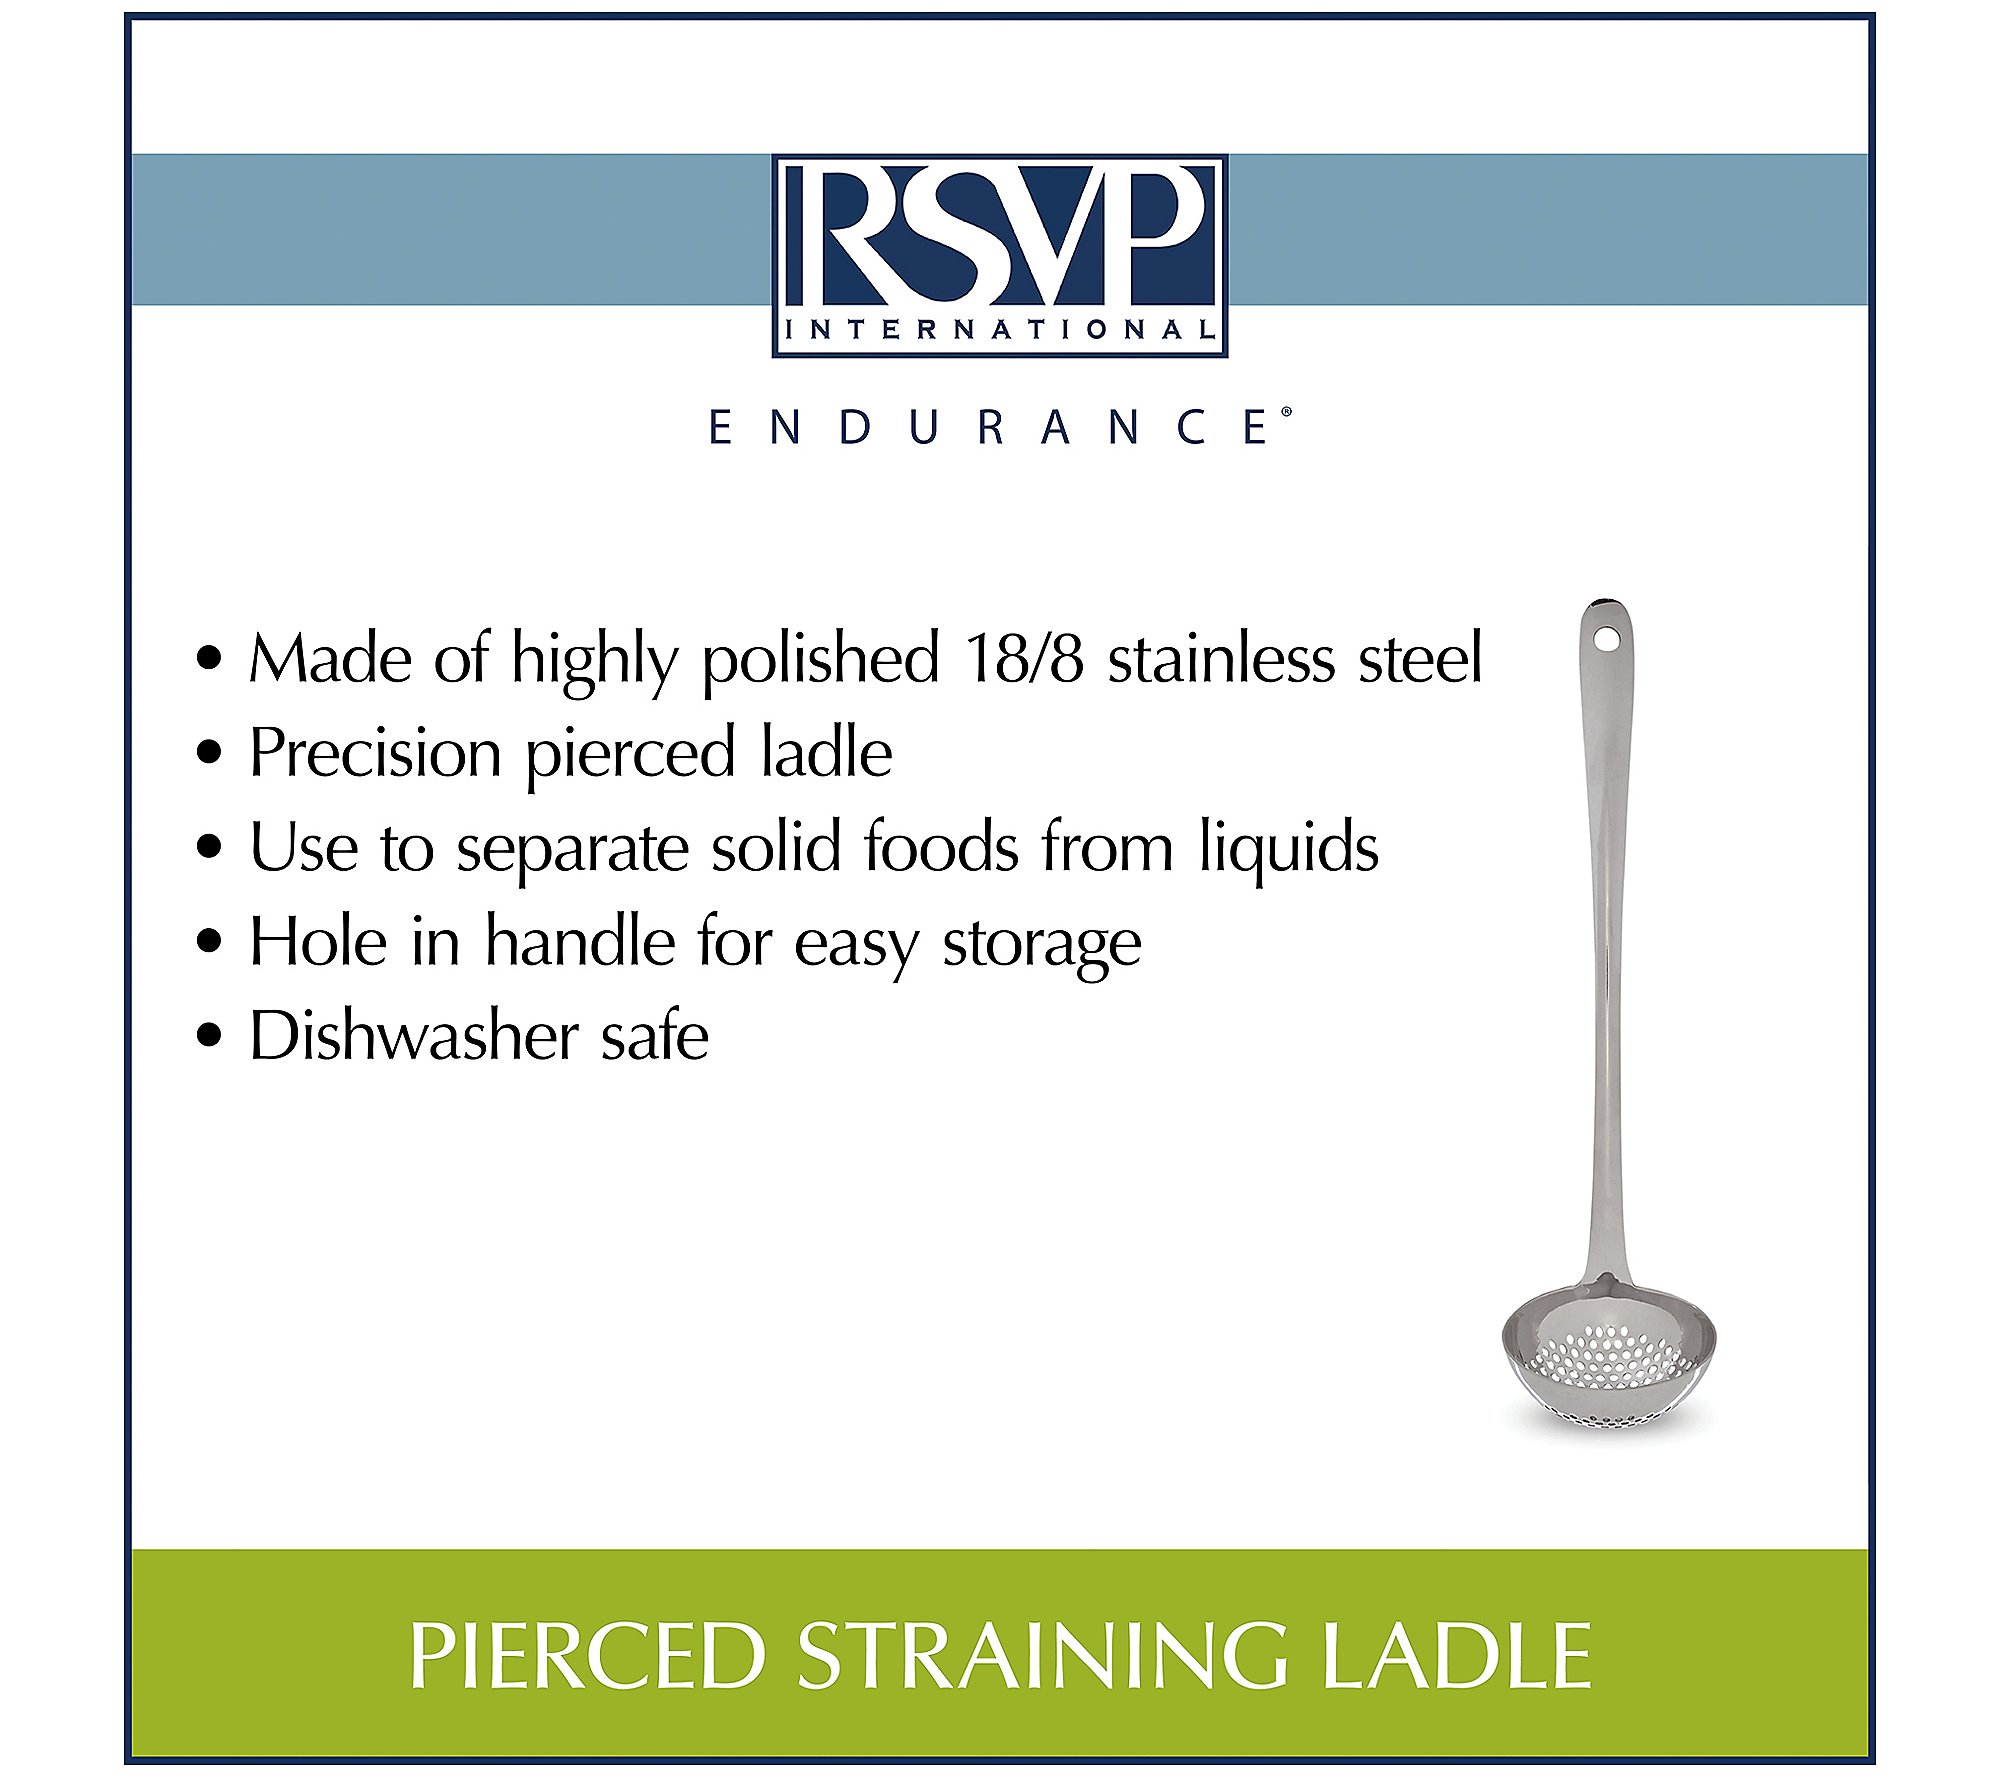 RSVP Endurance Pierced Straining Ladle